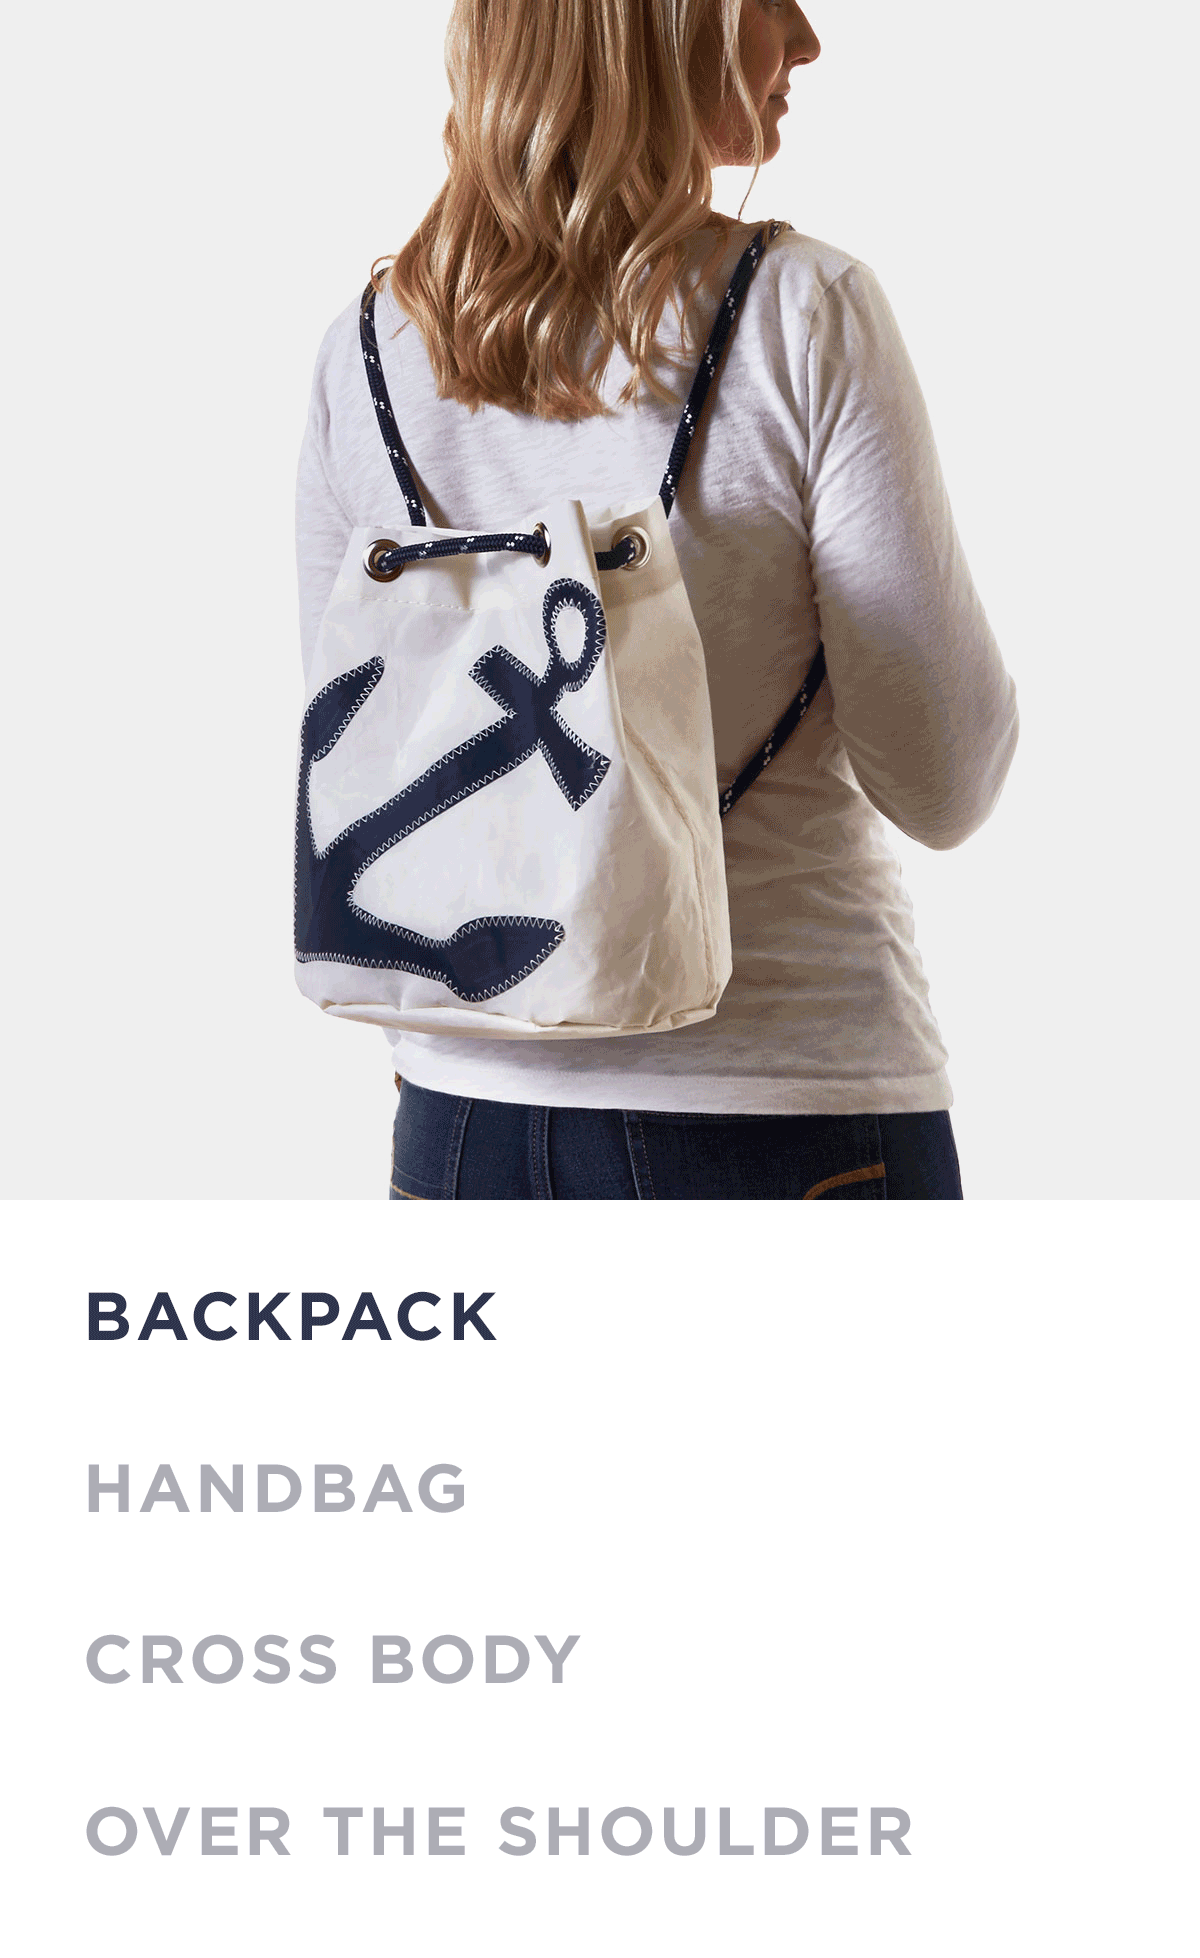 Backback, Handbag, Cross Body, Over the Shoulder